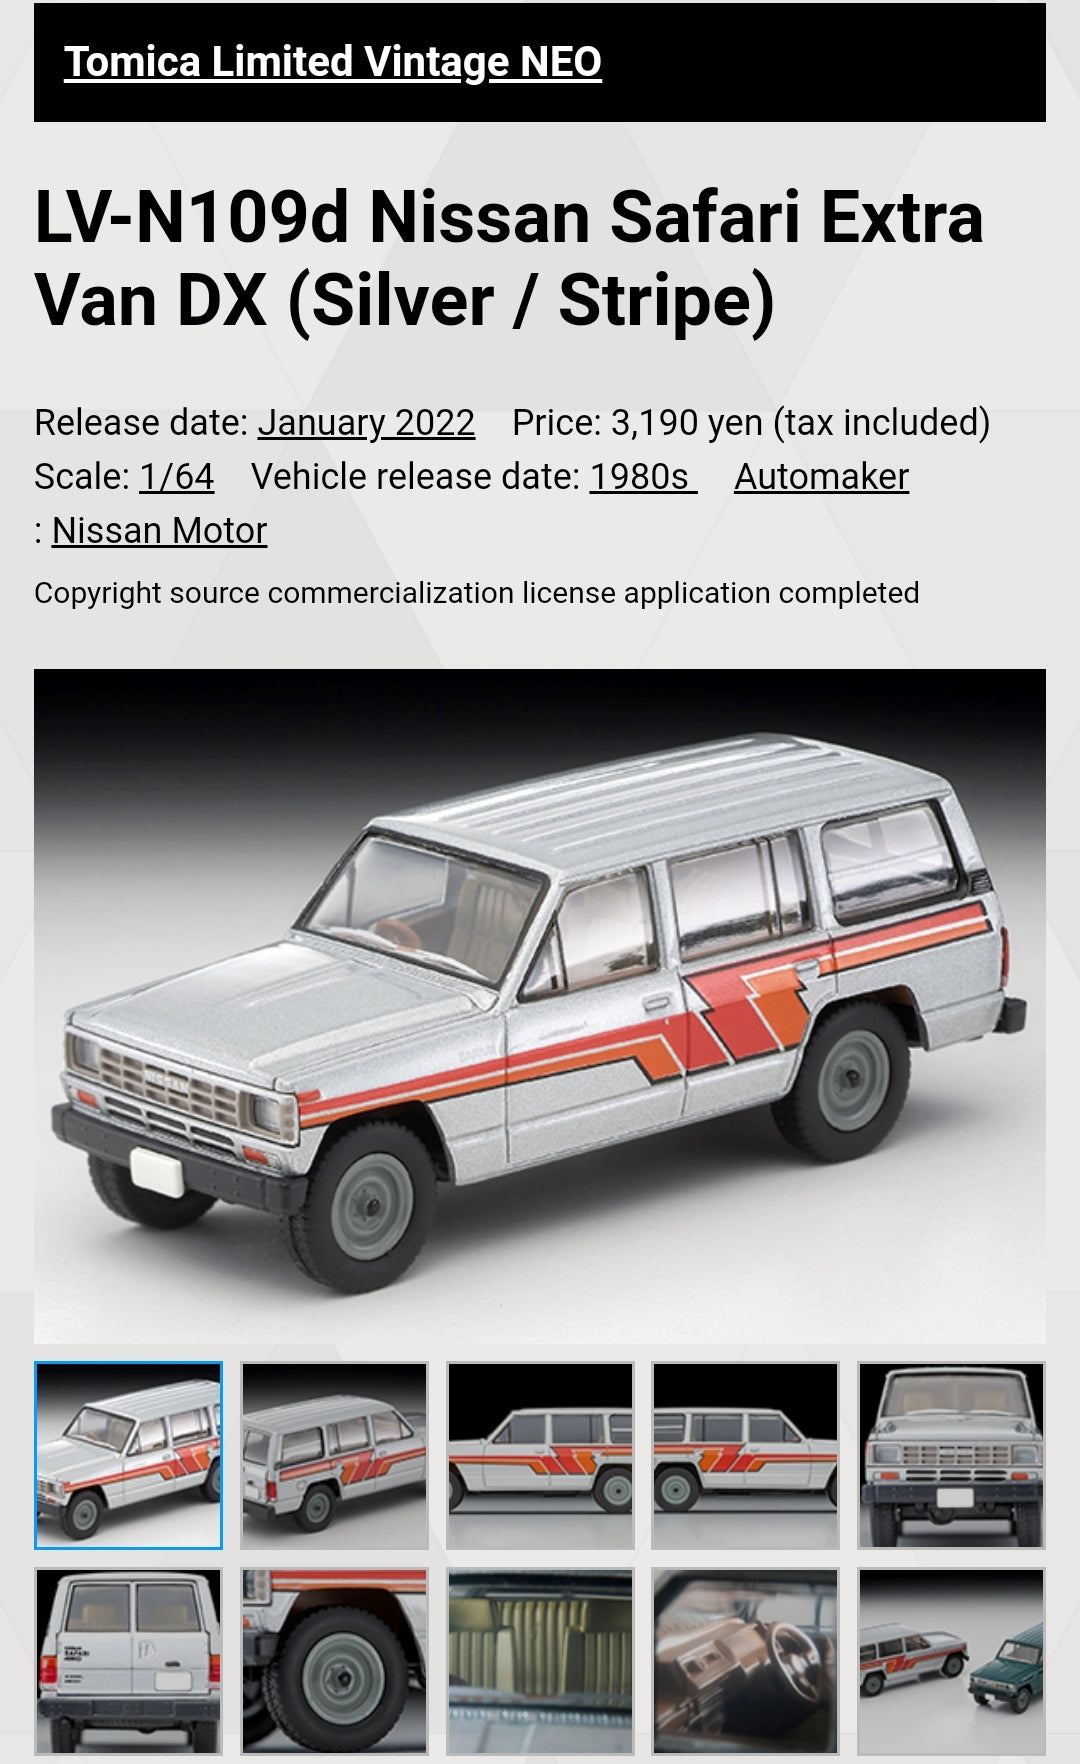 Tomica Limited Vintage Neo LV-N109d Nissan Safari Extra Van DX Silver/Stripe